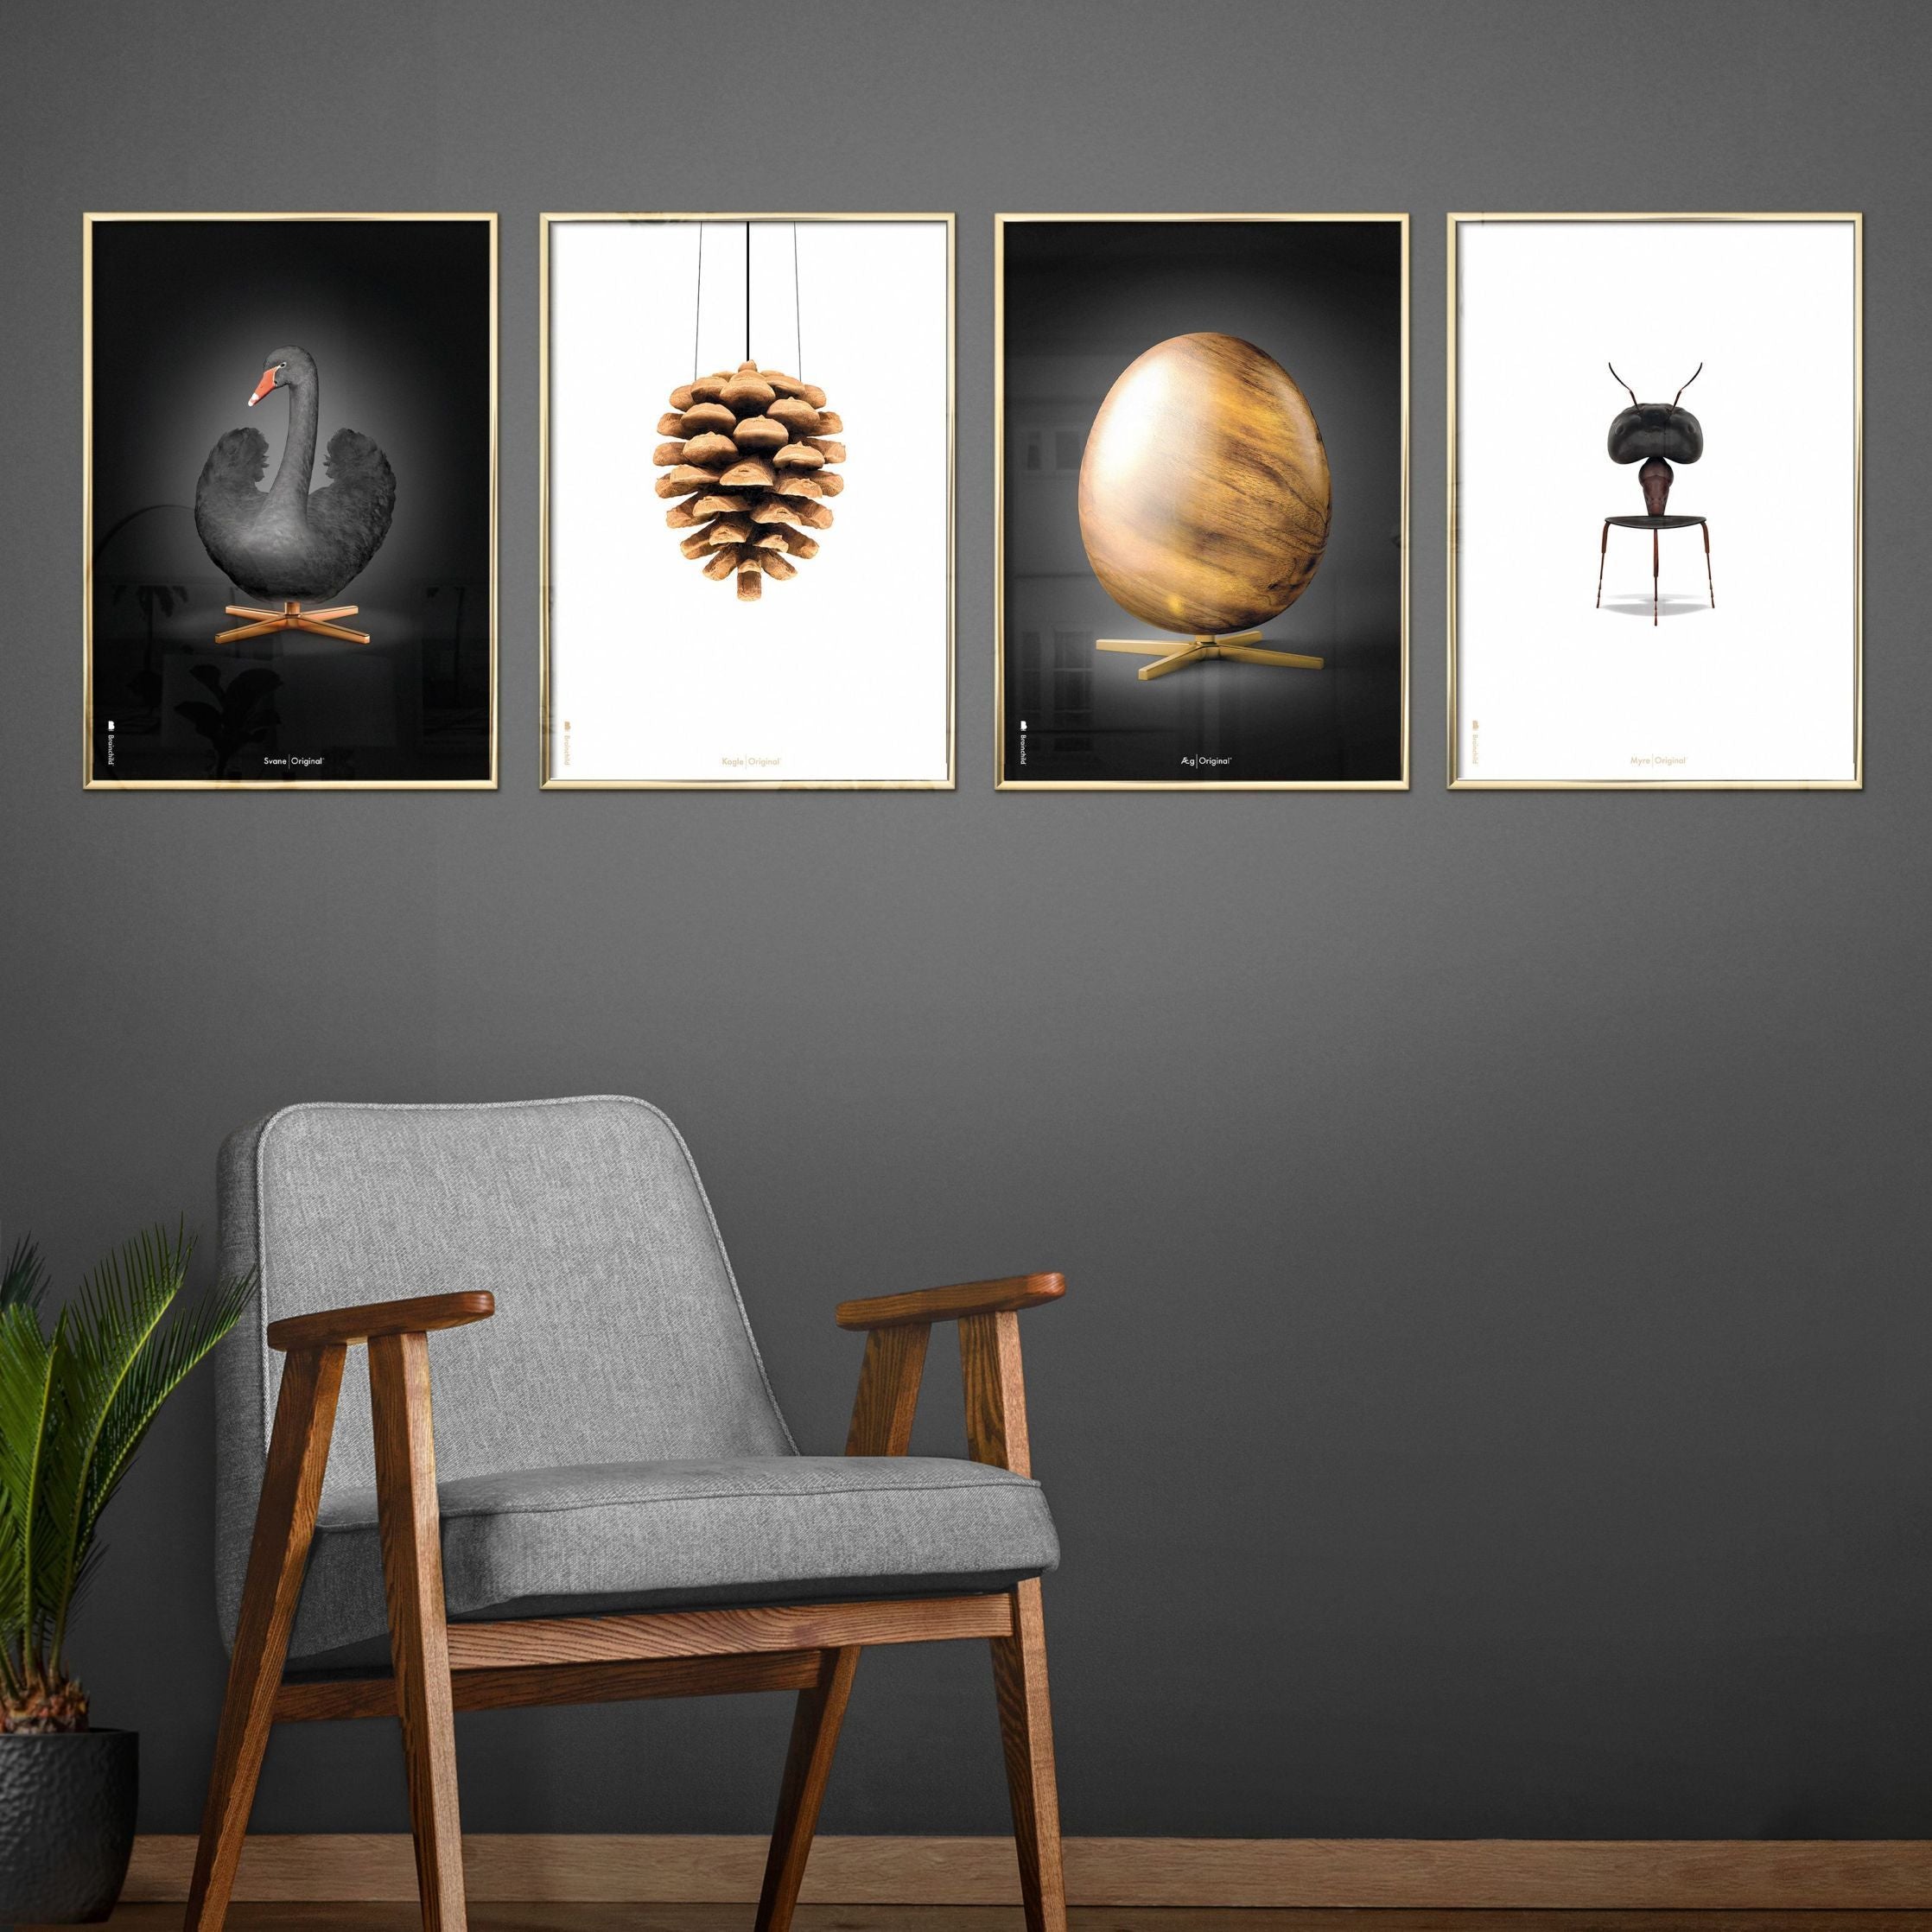 Brainchild Ant Classic Poster, Frame Made Of Light Wood 70x100 Cm, White Background